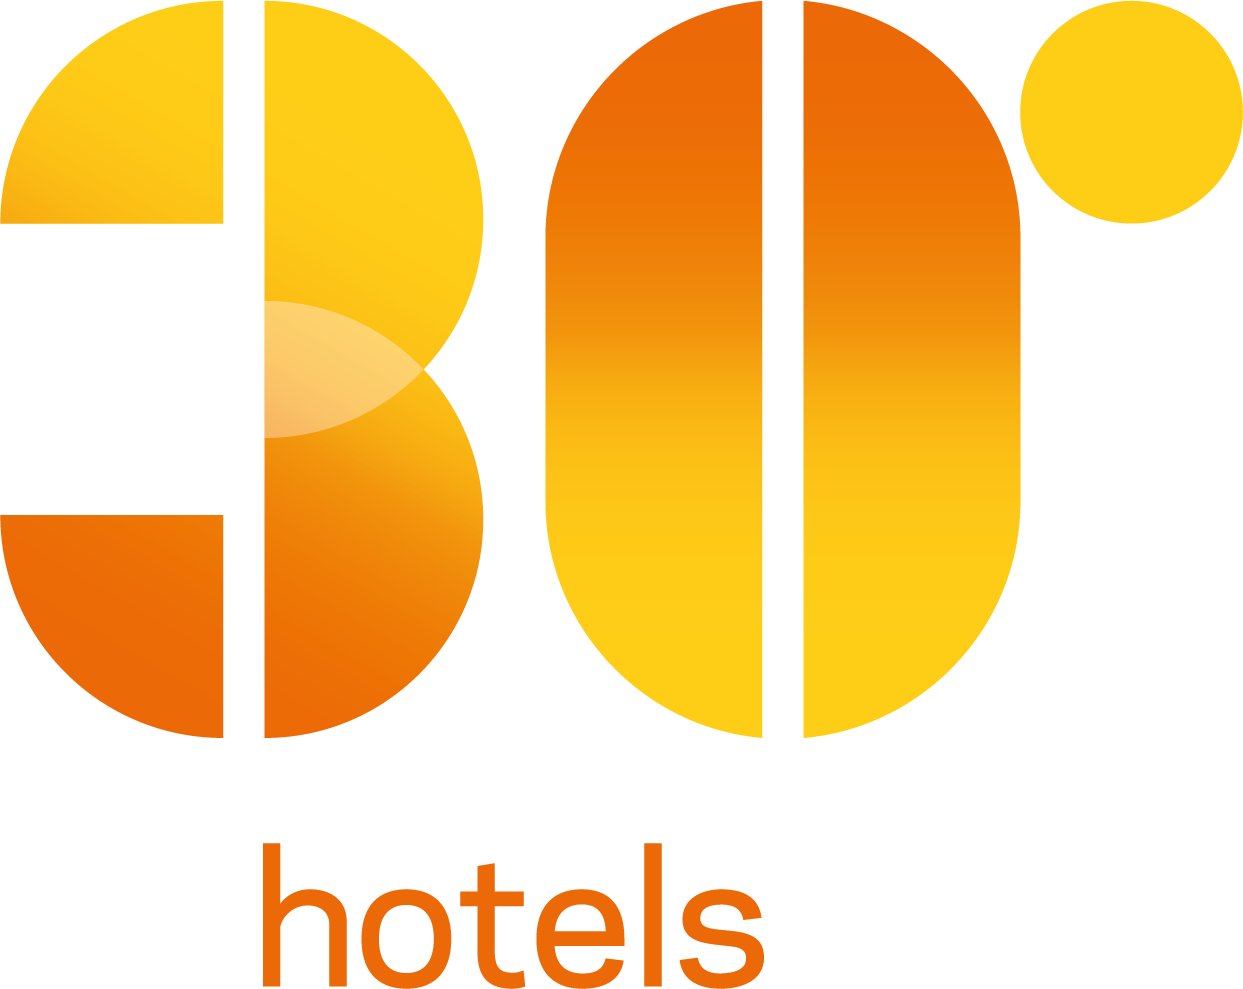 30º Hotels